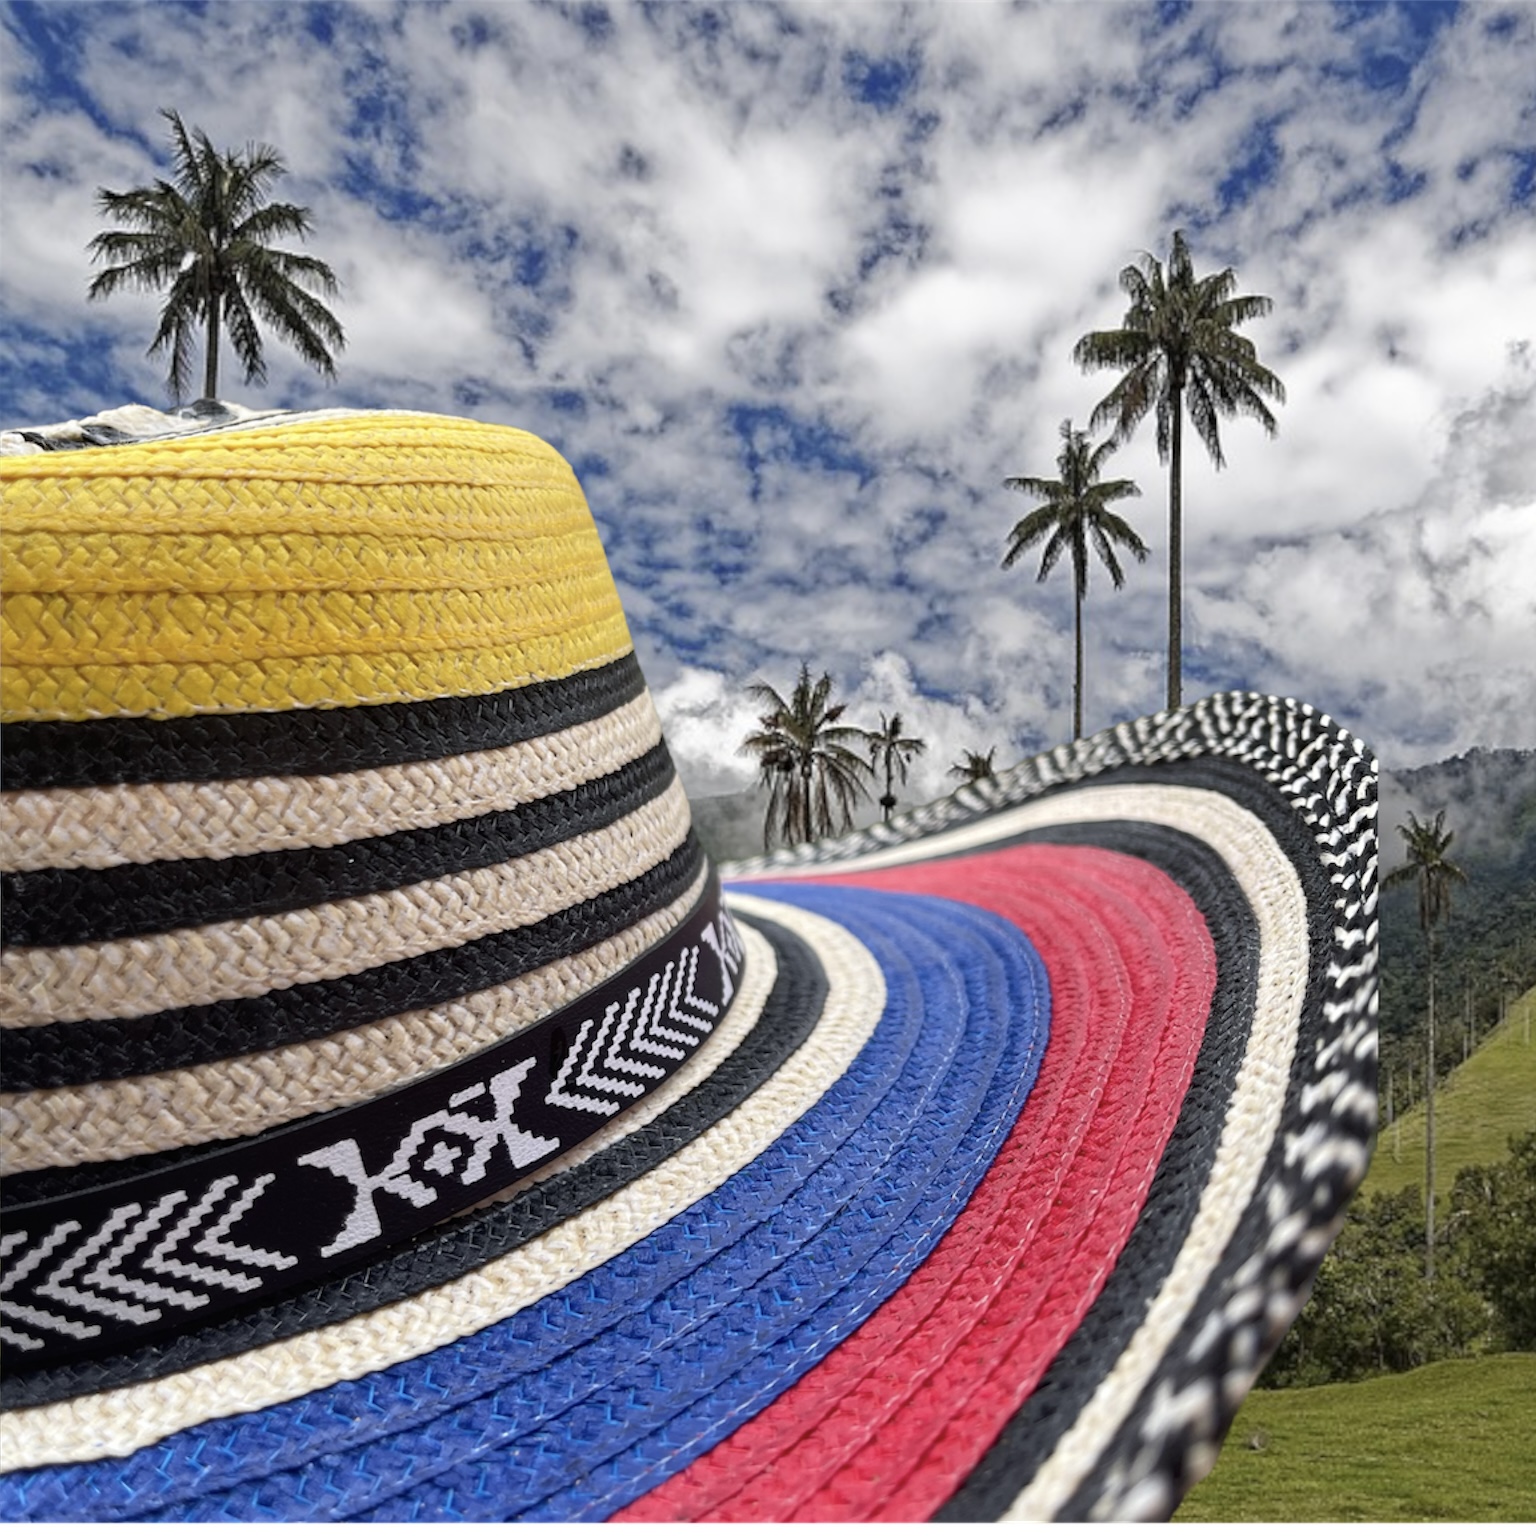 Colombian sombrero stock photo. Image of vueltiao, sombrero - 89820208